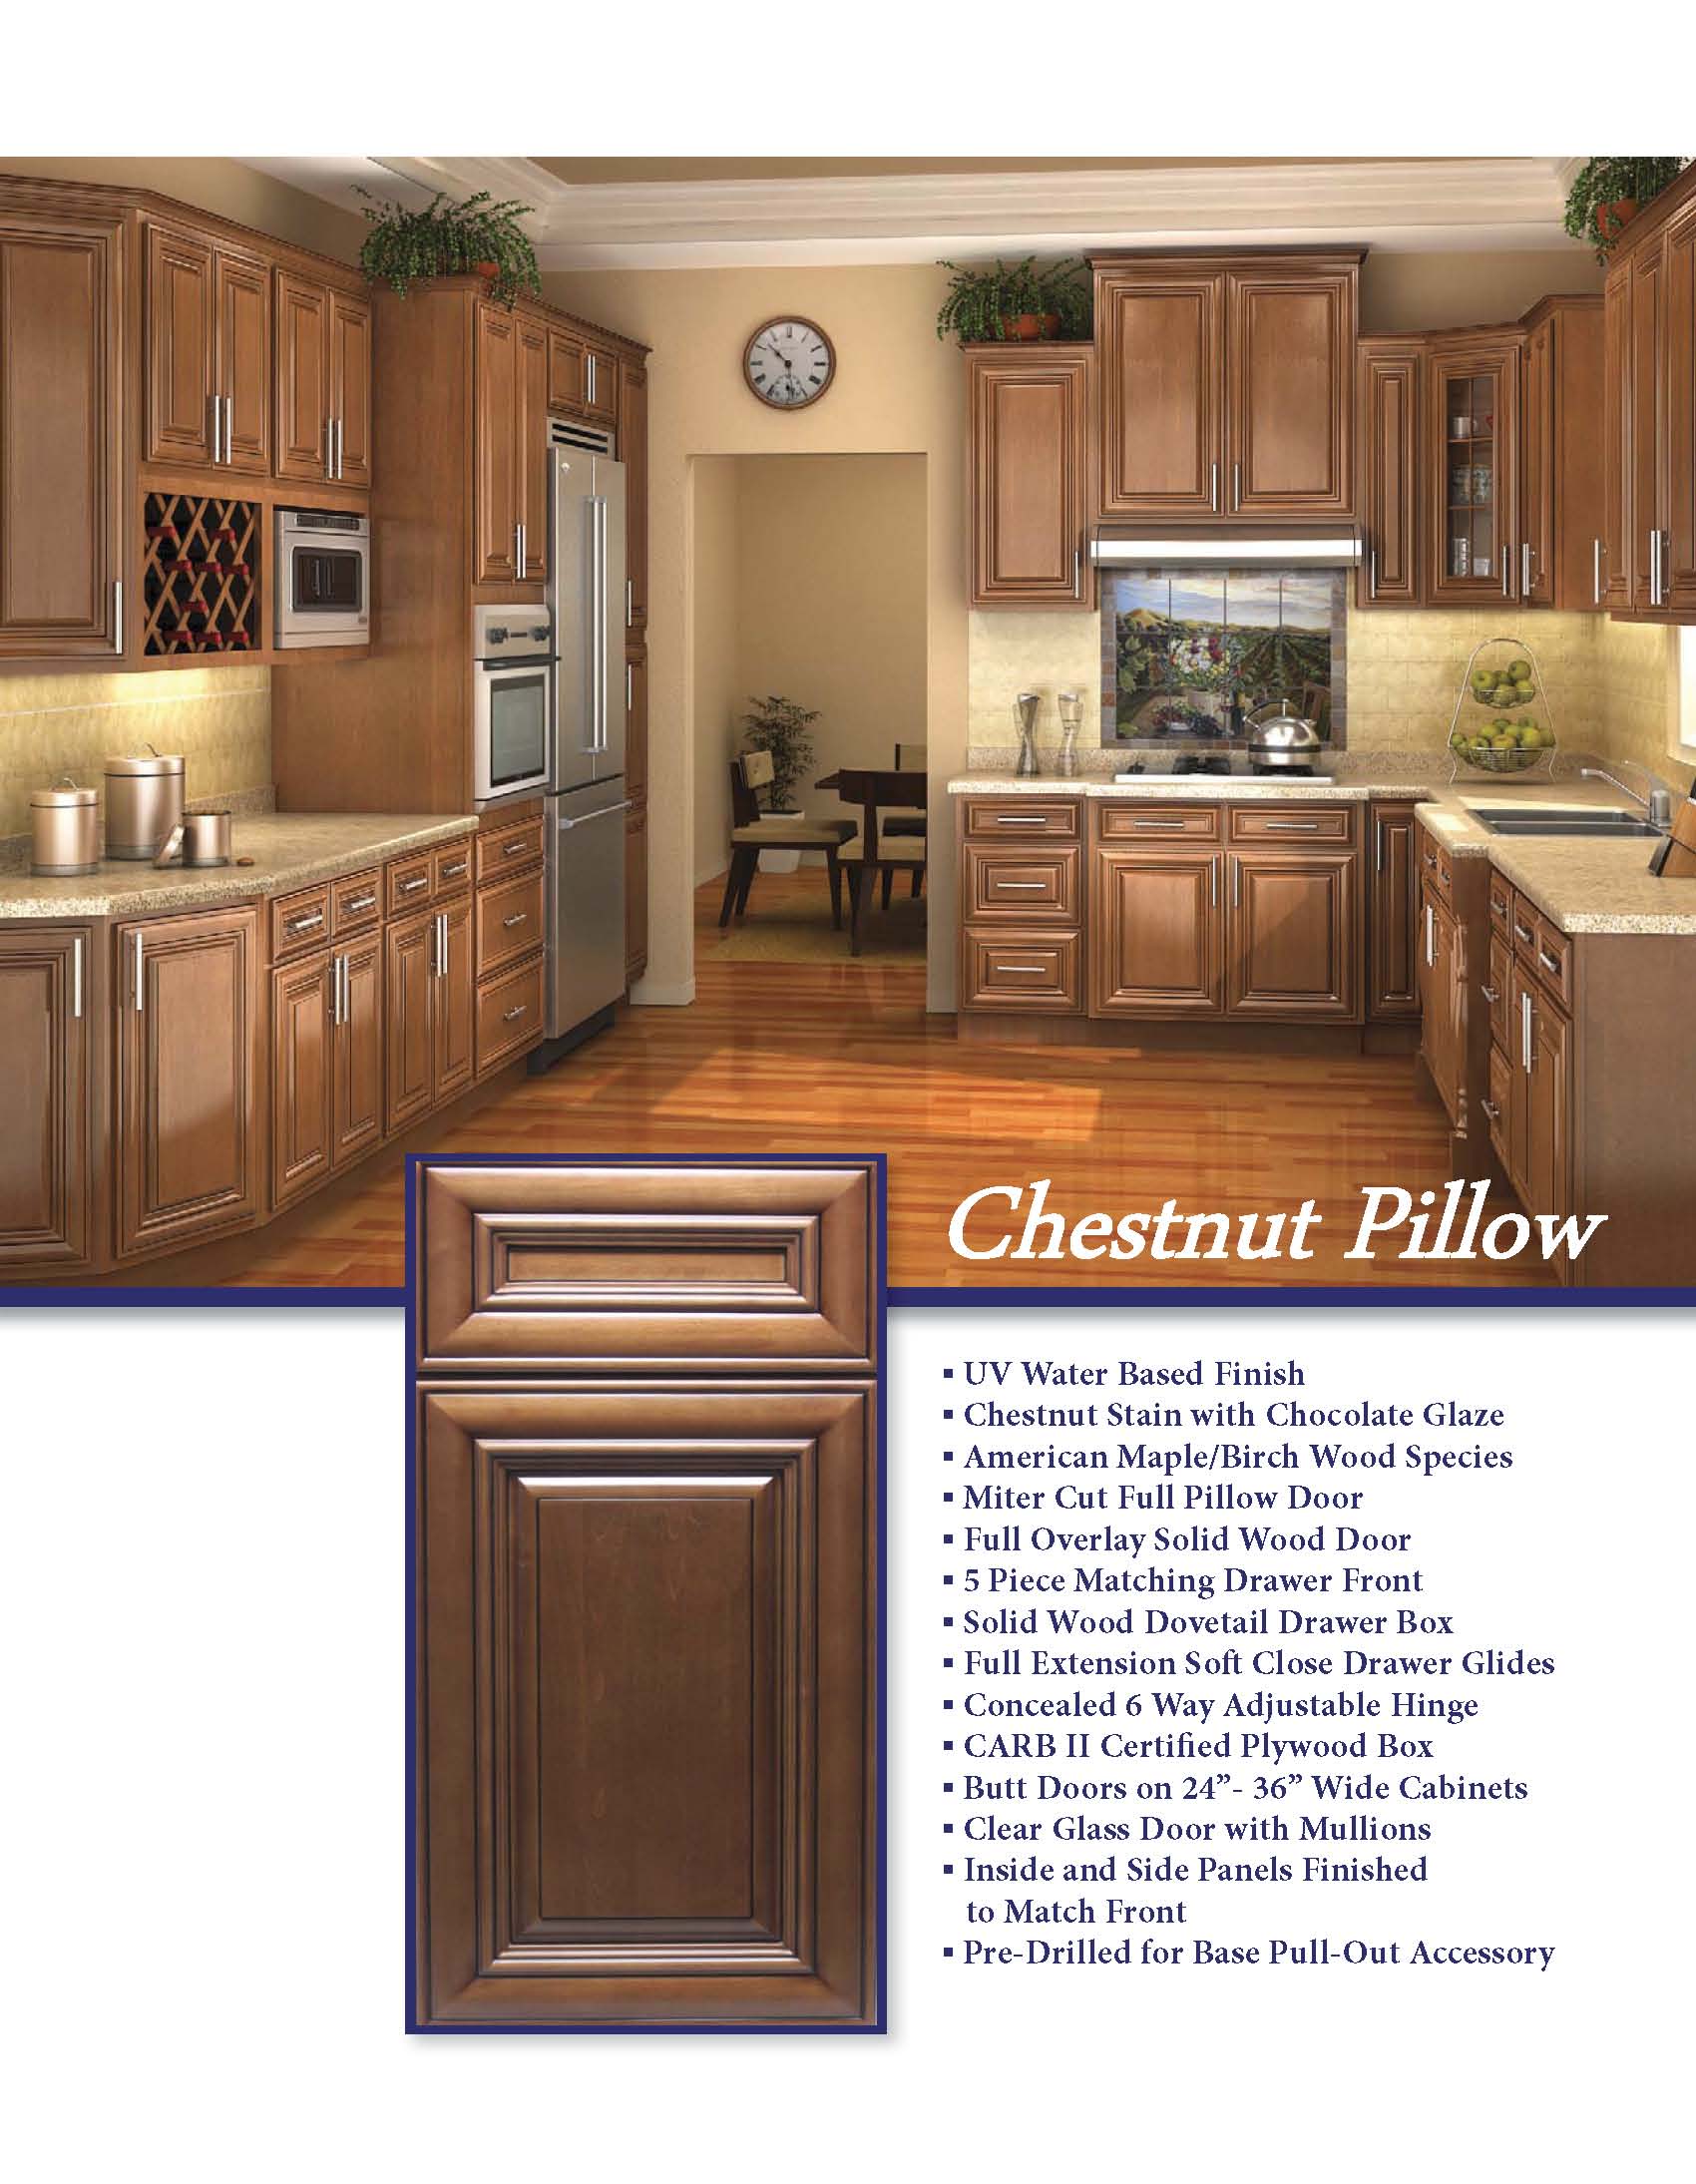 Chestnut Pillow Woodborne Cabinets